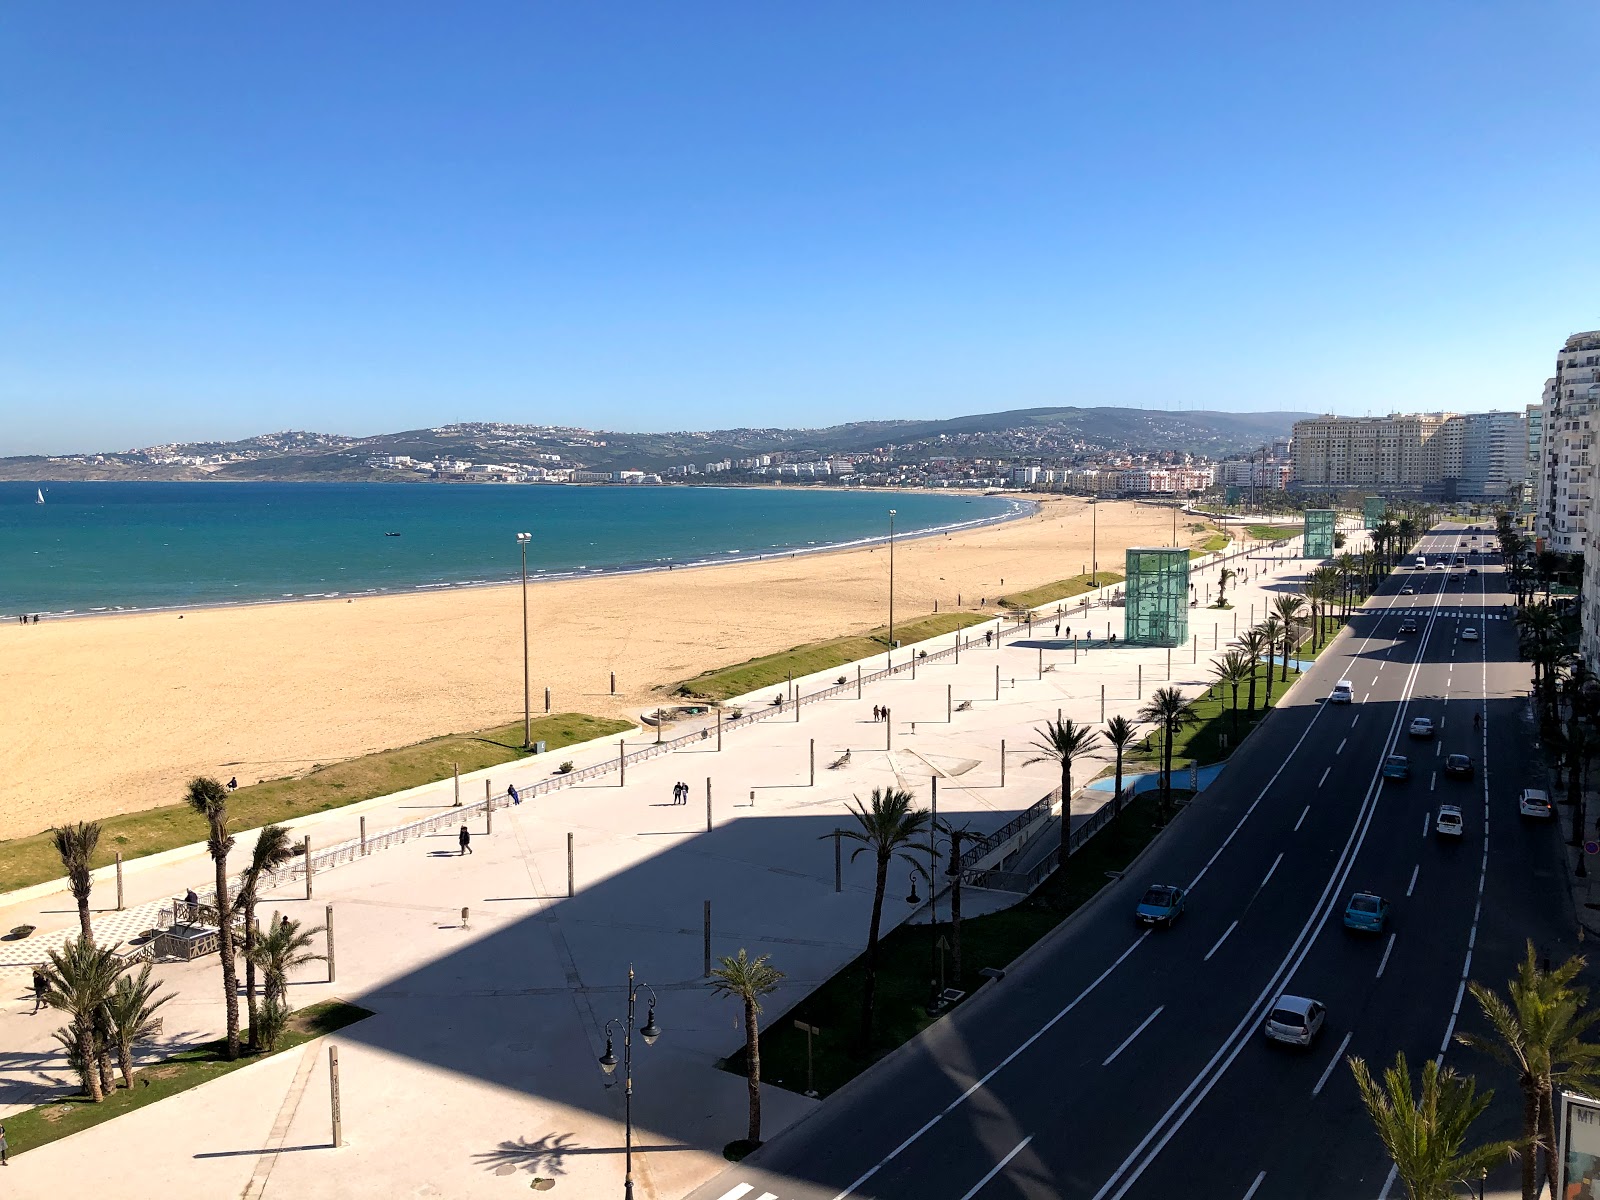 Fotografie cu Plaja Tangier cu nivelul de curățenie in medie